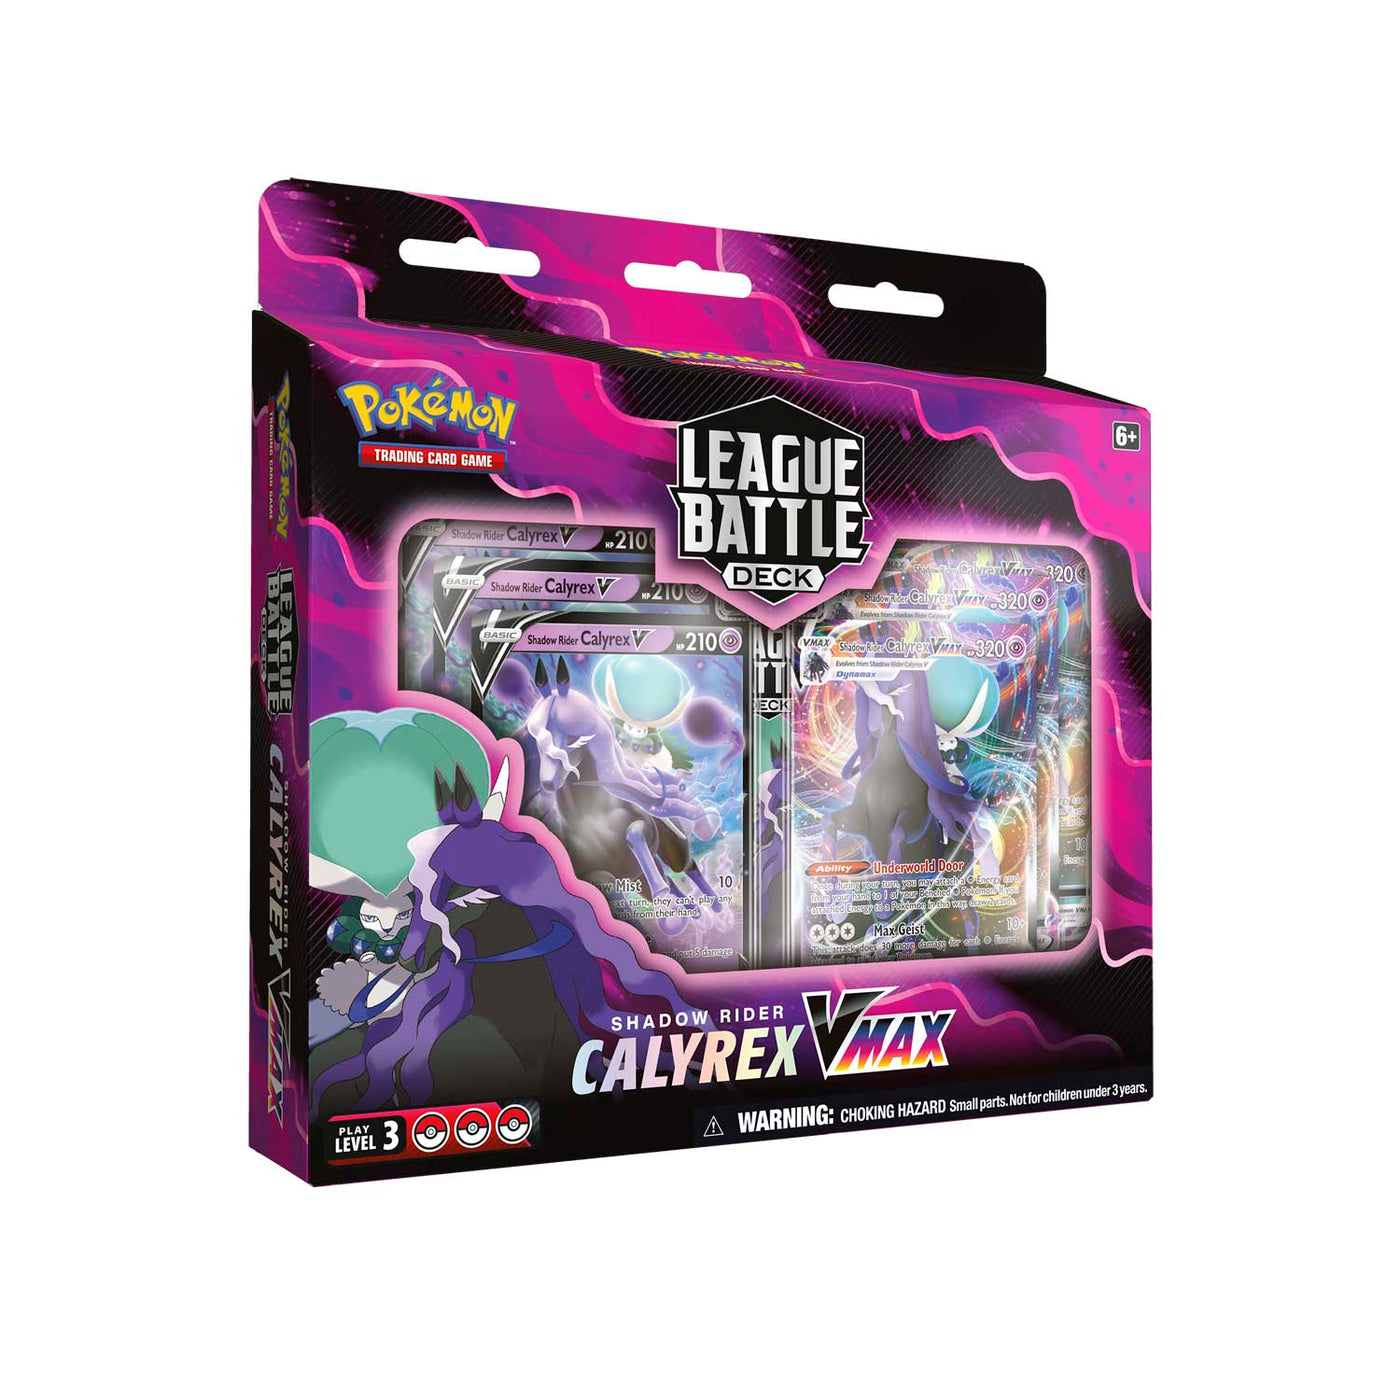 Pokémon Shadow Rider Calyrex VMAX League Battle Deck